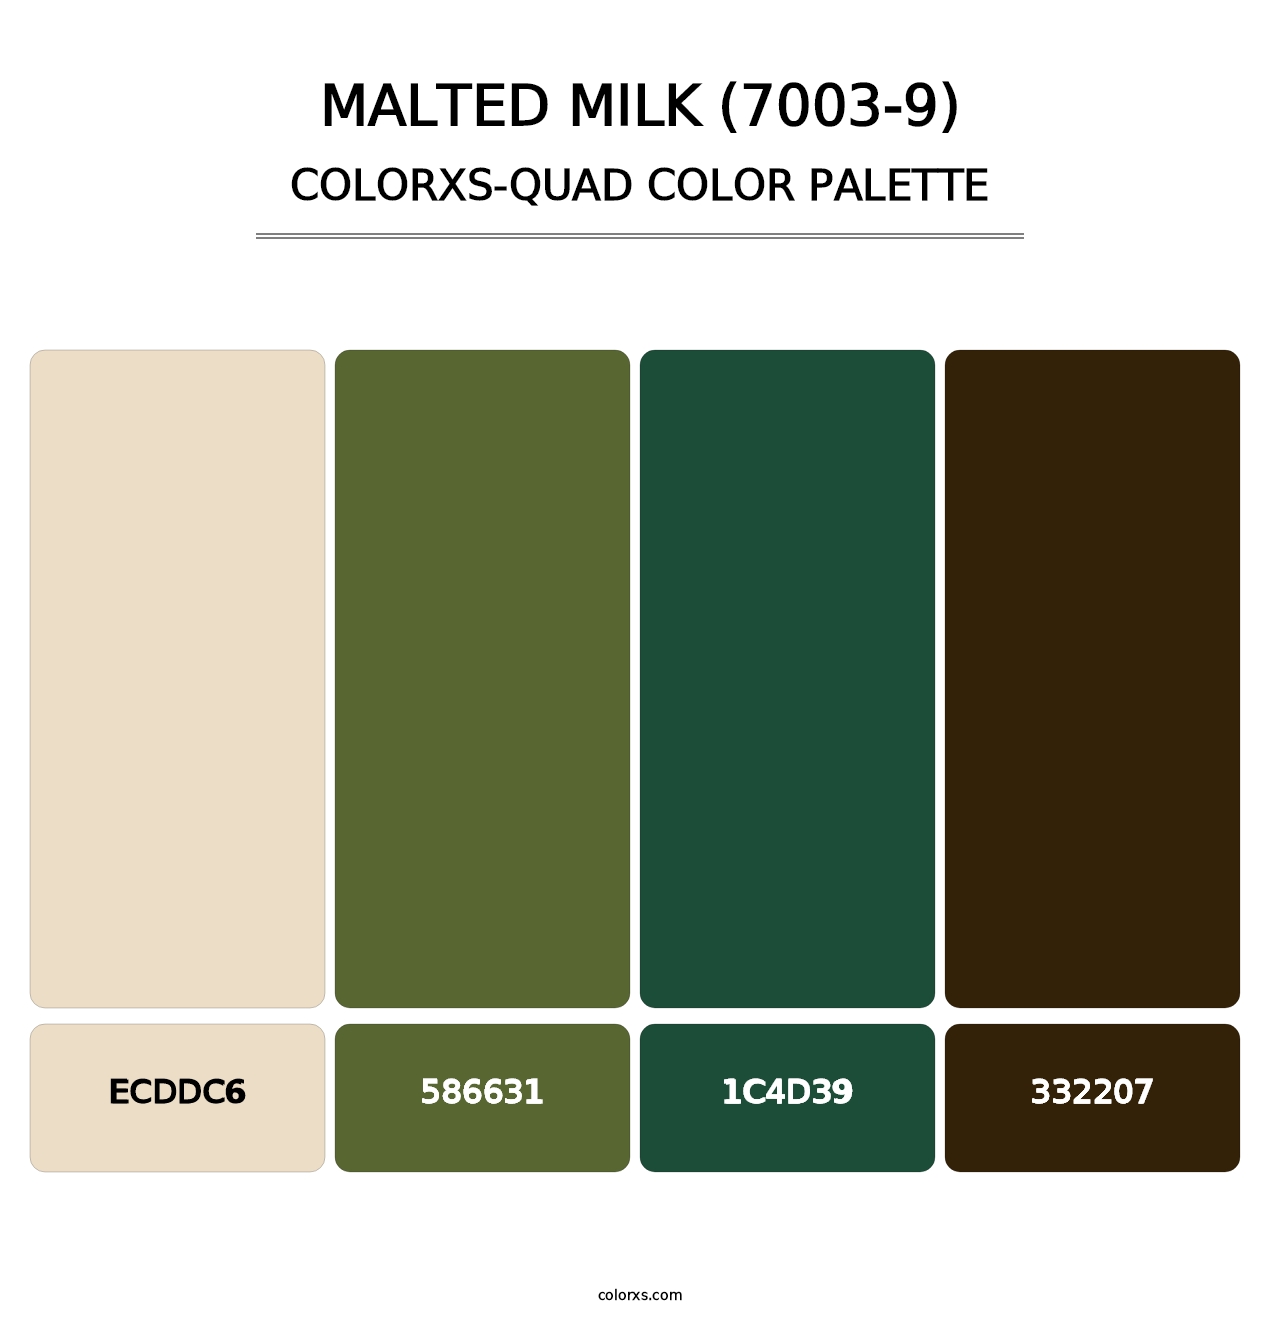 Malted Milk (7003-9) - Colorxs Quad Palette